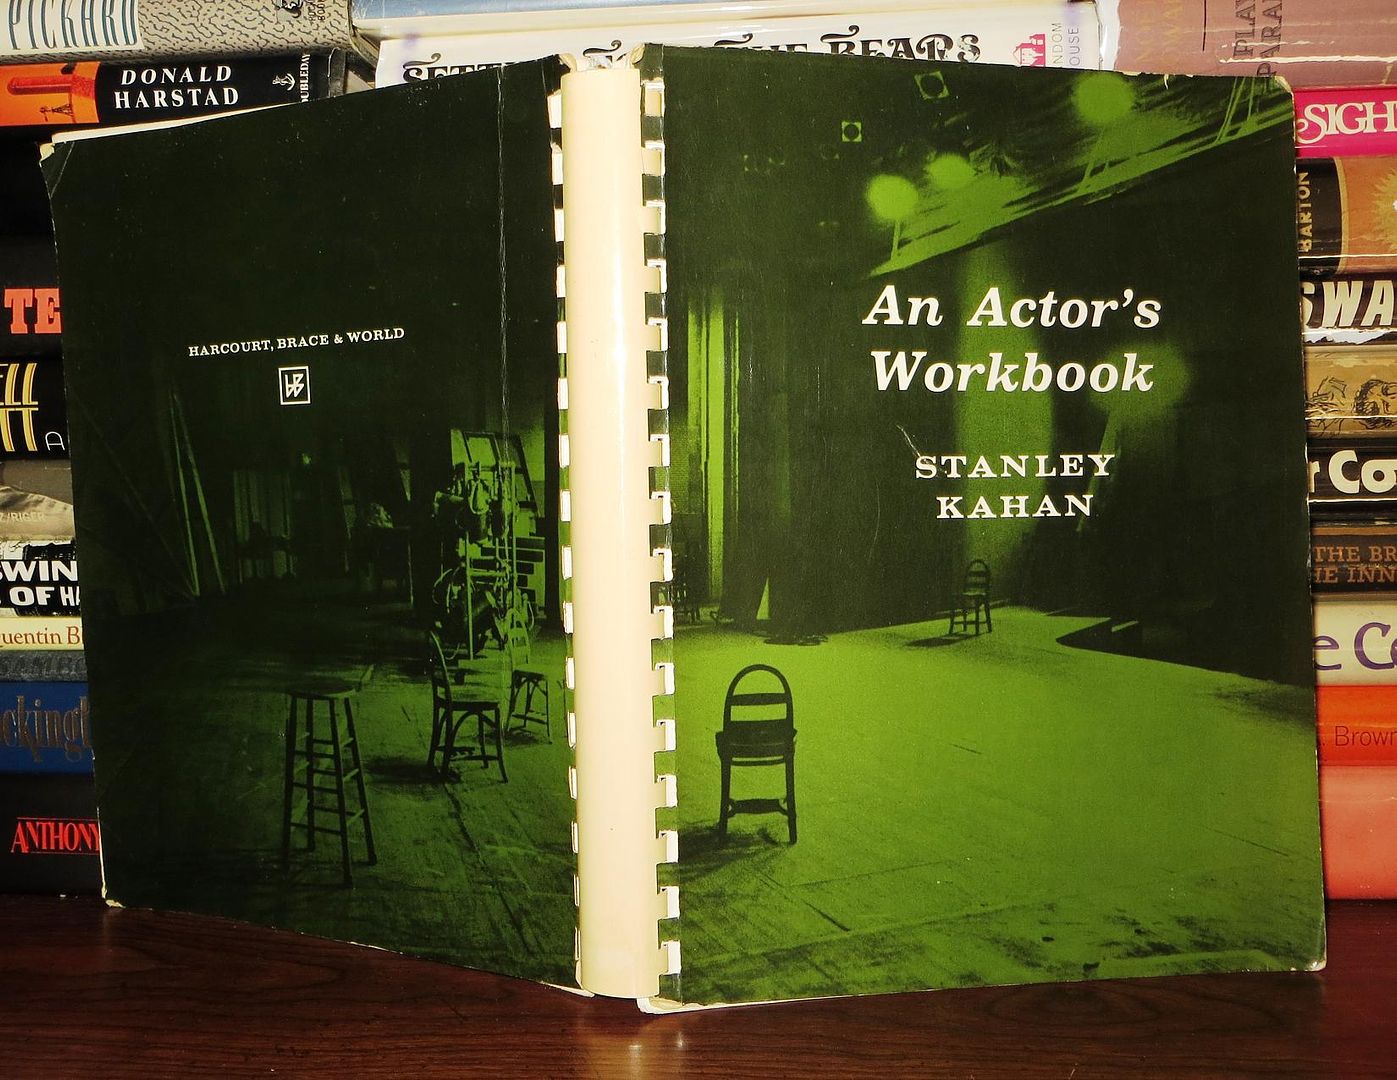 KAHAN, STANLEY - An Actor's Workbook